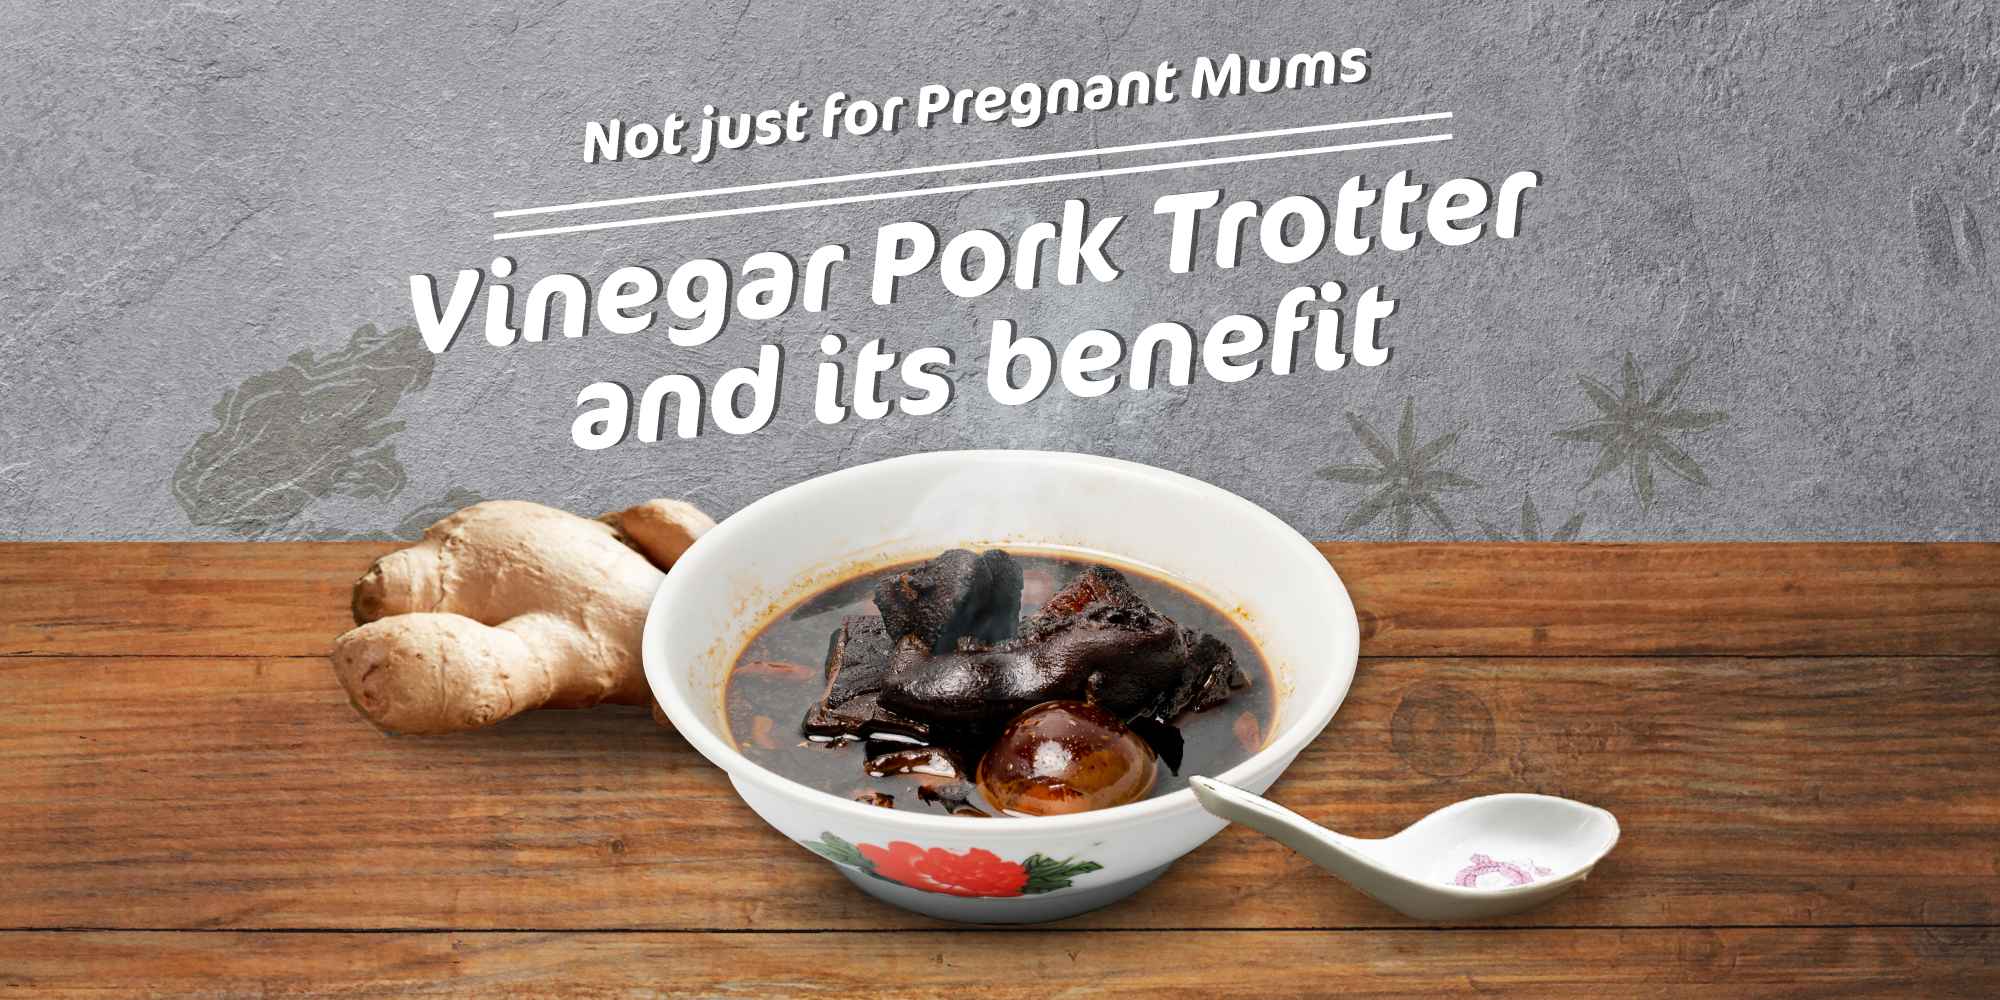 not-just-for-pregnant-mums-benefits-of-vinegar-pork-trotter